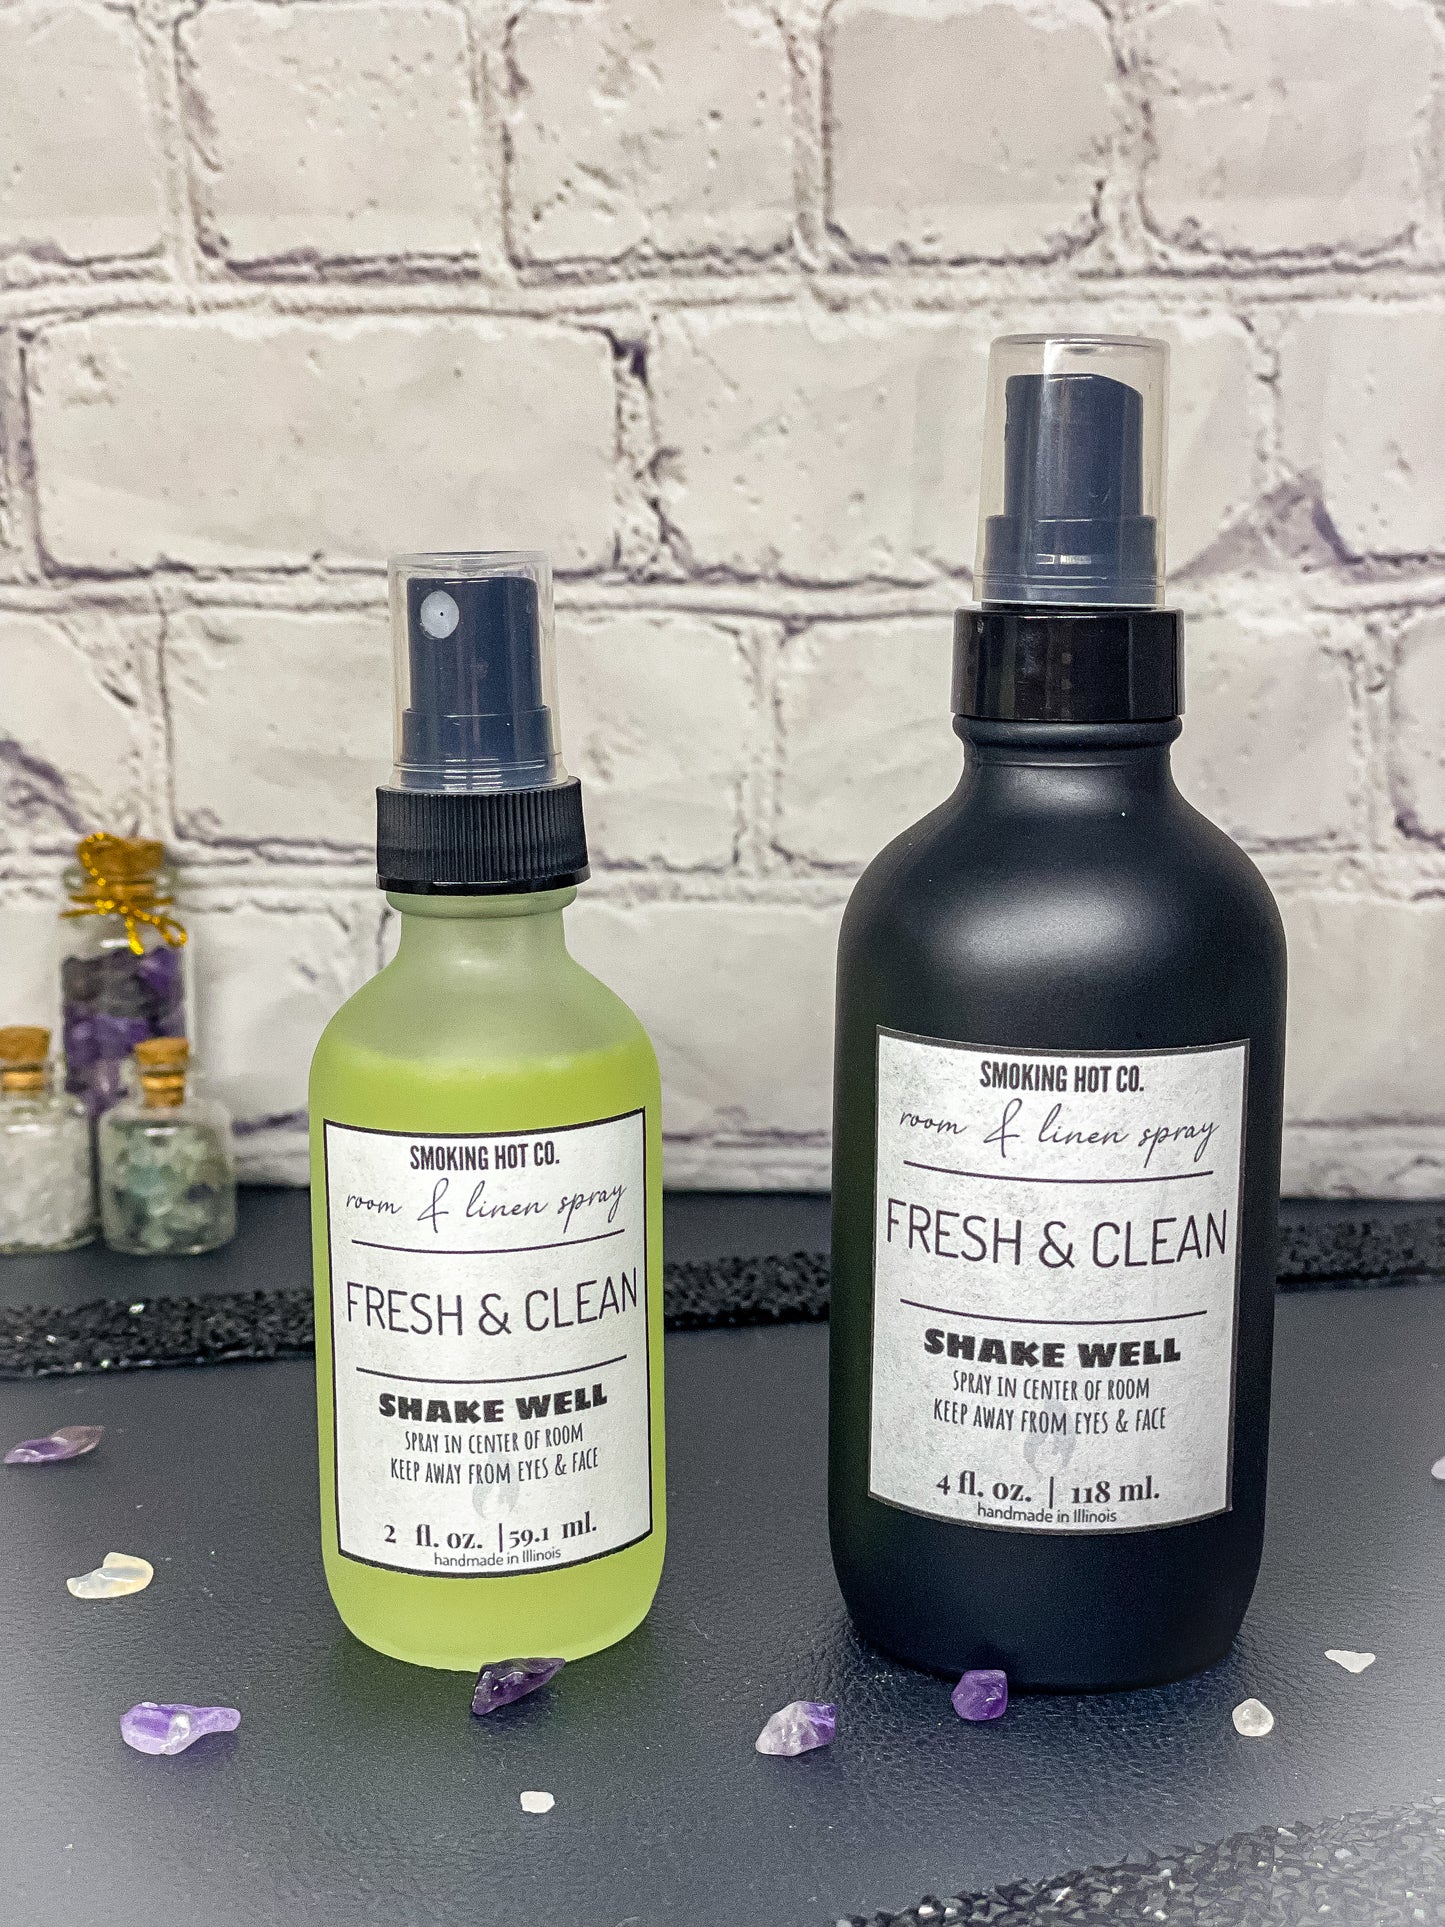 Fresh & clean - room & linen spray